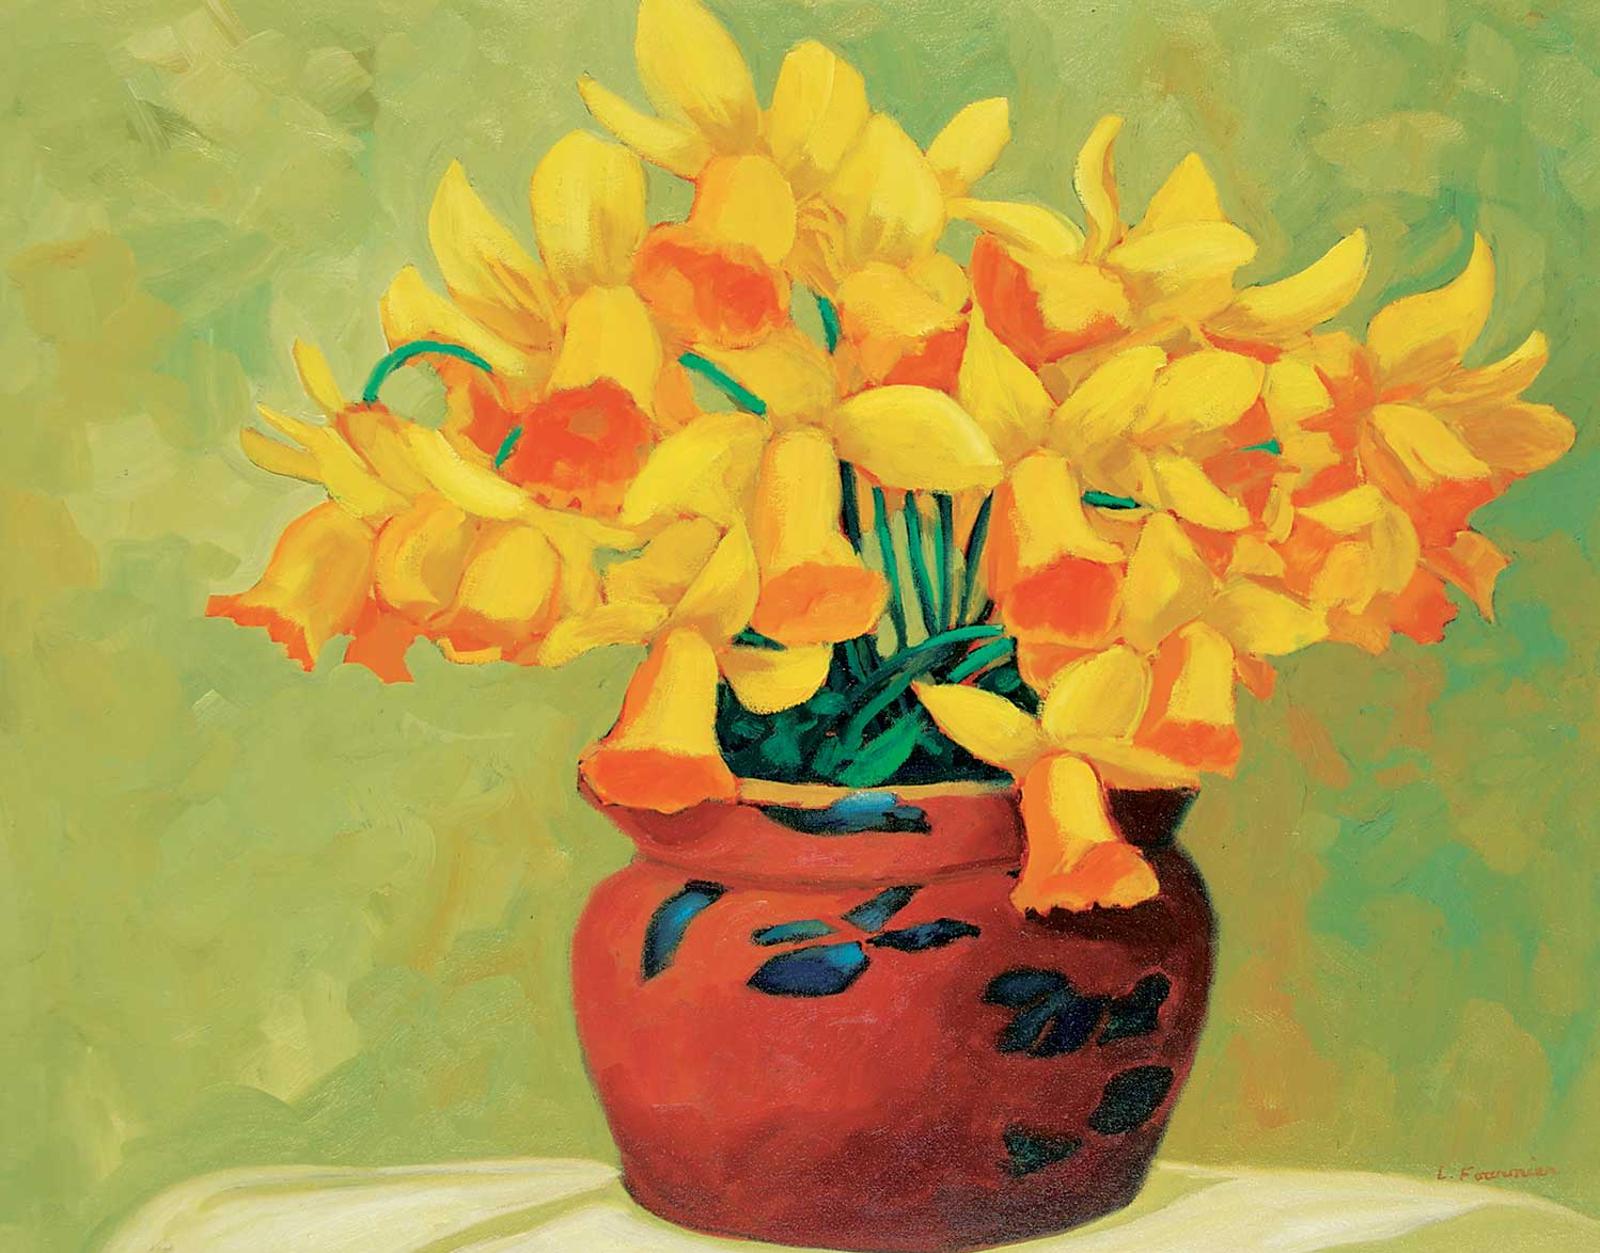 Liliane Fournier (1942) - Daffodils in Clay Pot